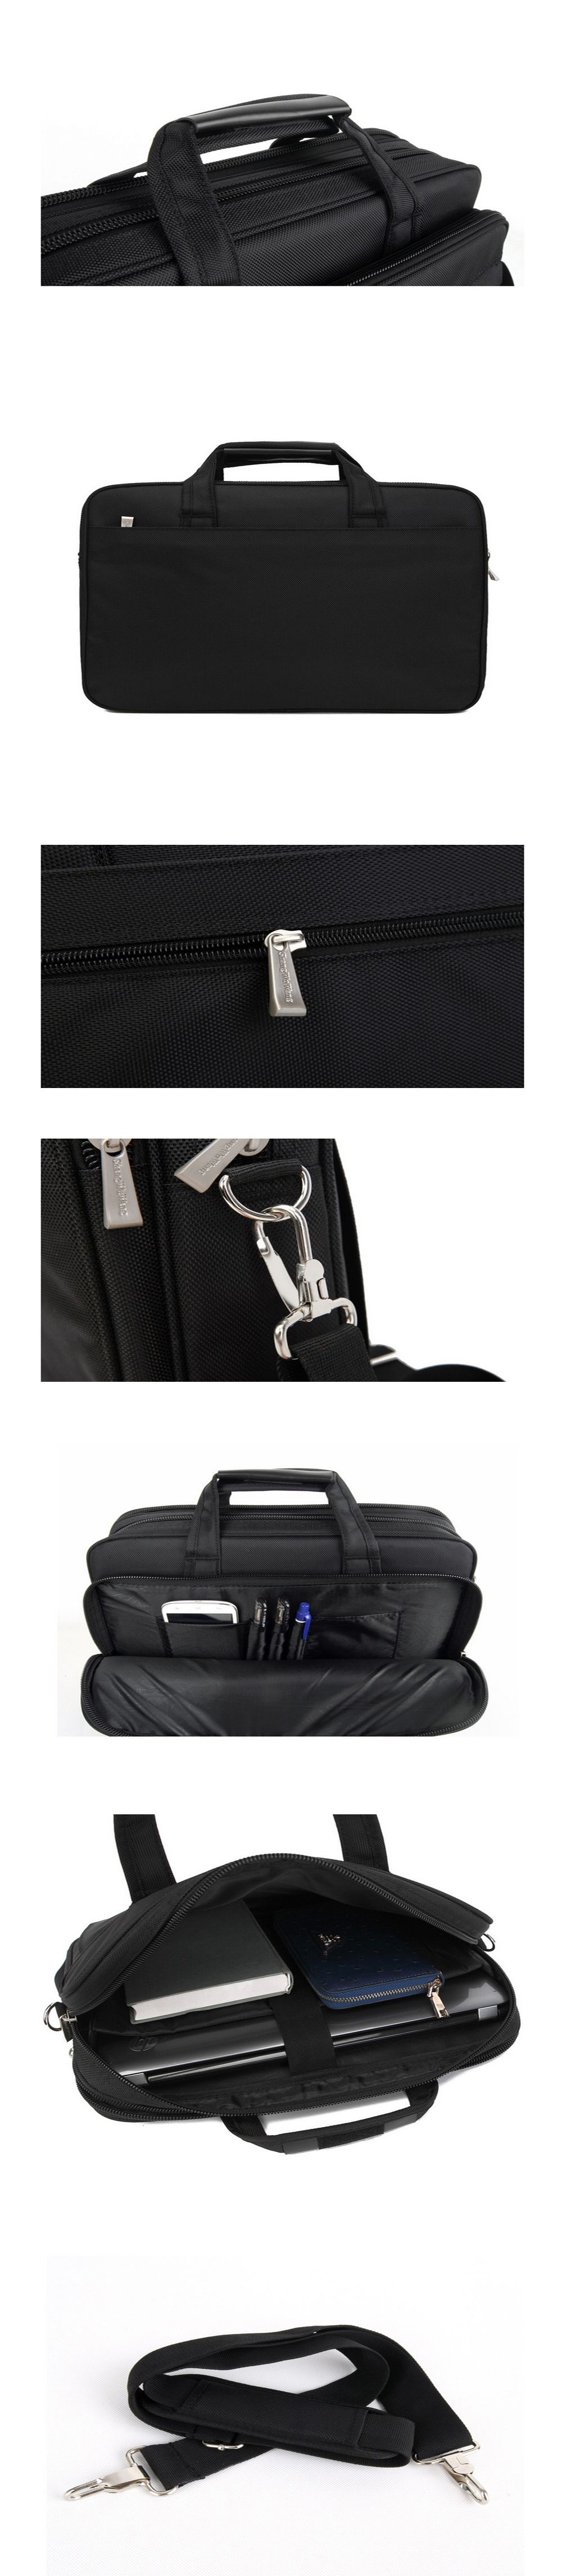 14-inch-Oxford-Briefcase-Business-Laptop-Bag-Waterproof-Portable-Messengers-Bag-Shoulder-carrying-Mu-1414974